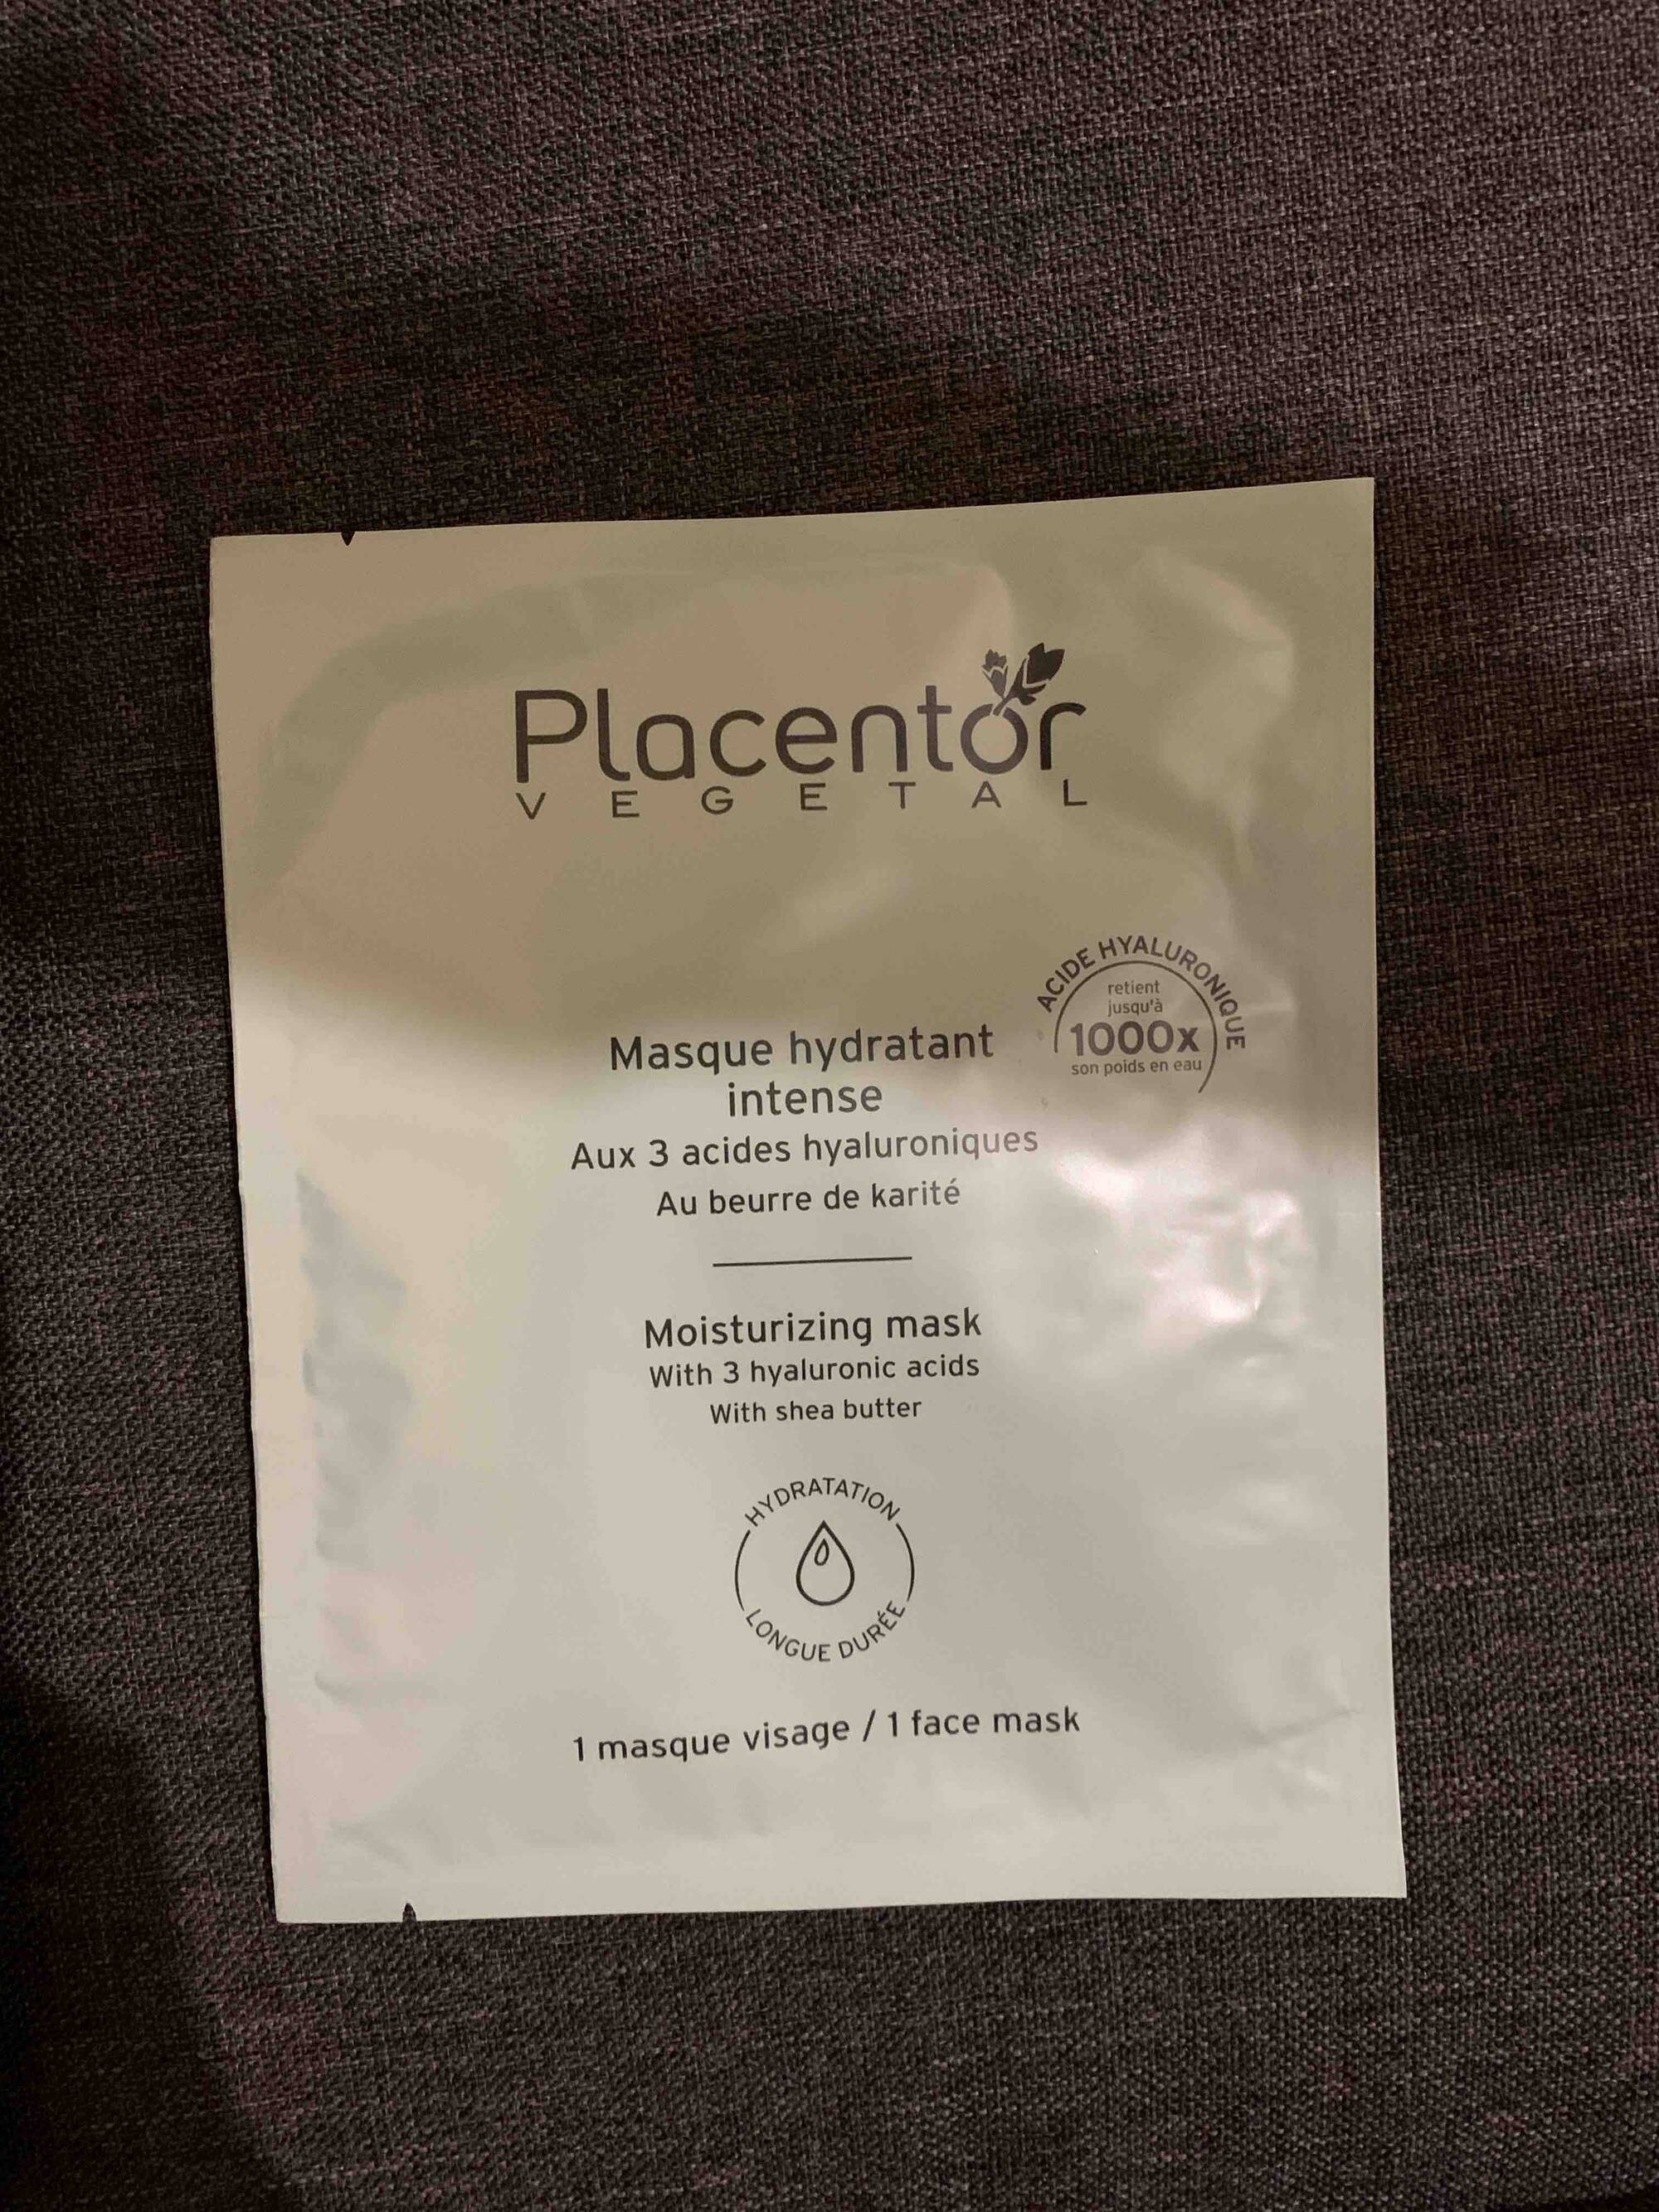 PLACENTOR VÉGÉTAL - Masque hydratant intense